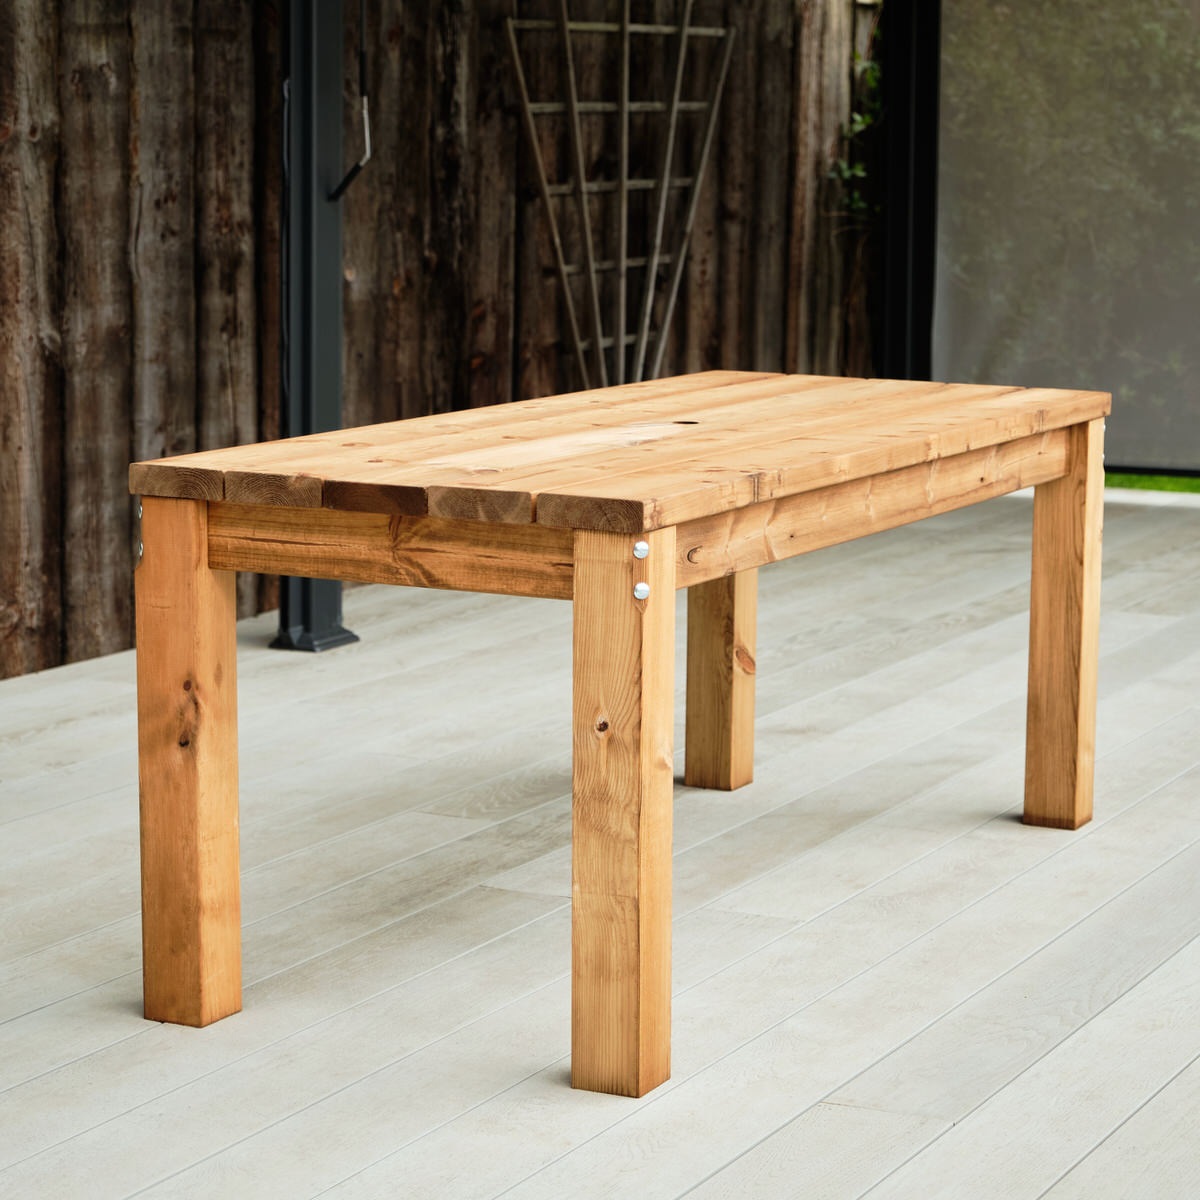 Rectangular Wooden Table Castle Range, Wood Outdoor Table